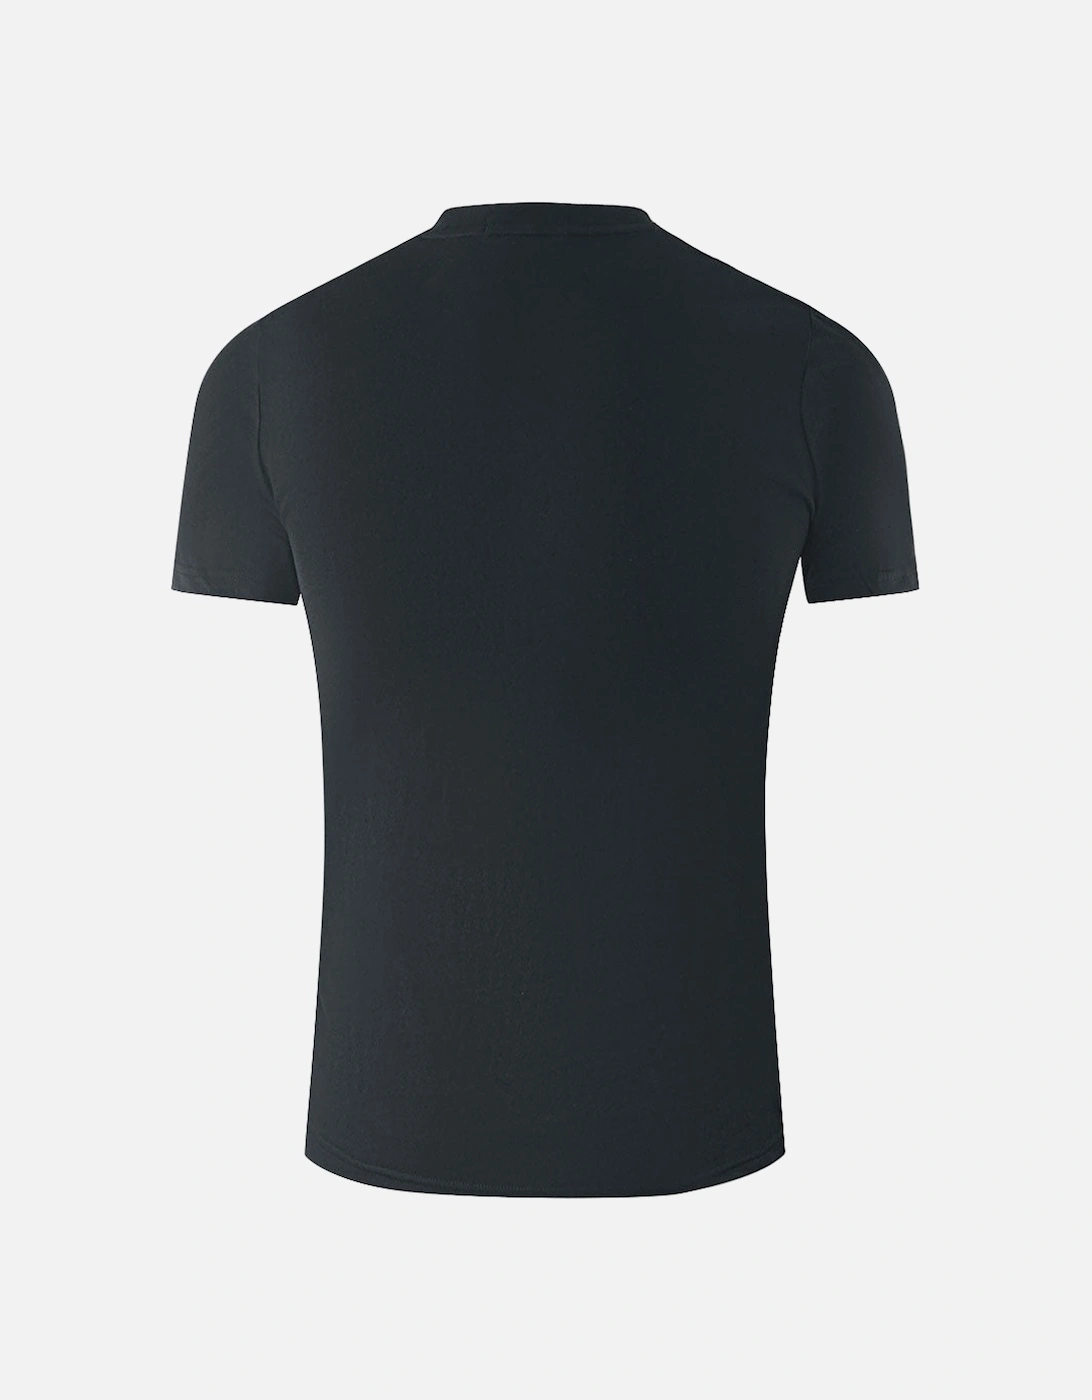 Embroidered Brand Logo Black T-Shirt